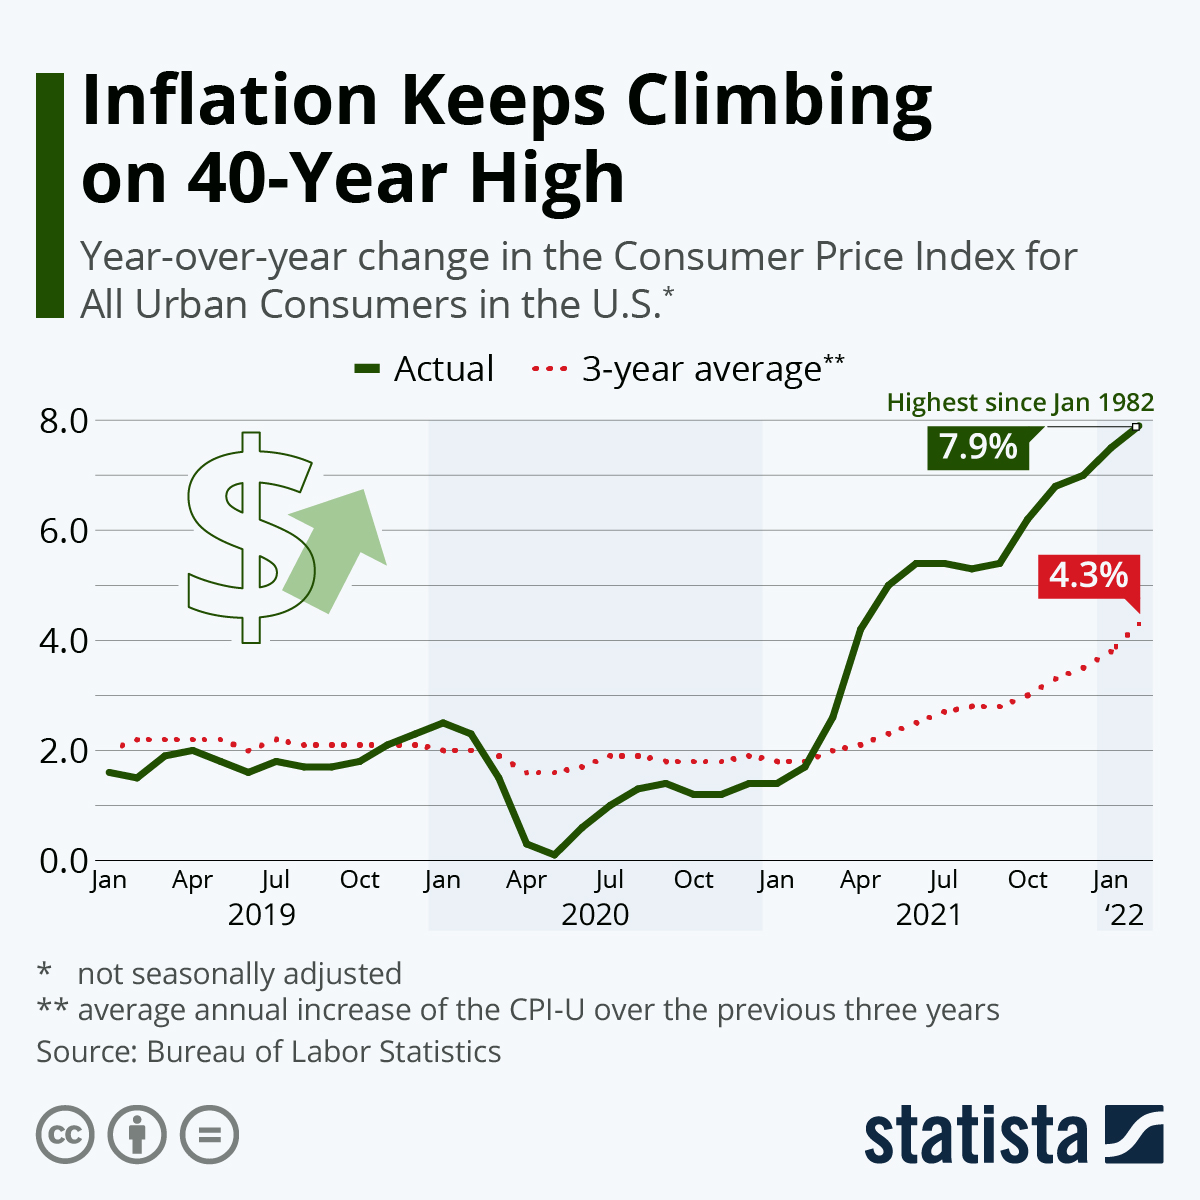 Inflation Keeps Climbing at 40-Year High